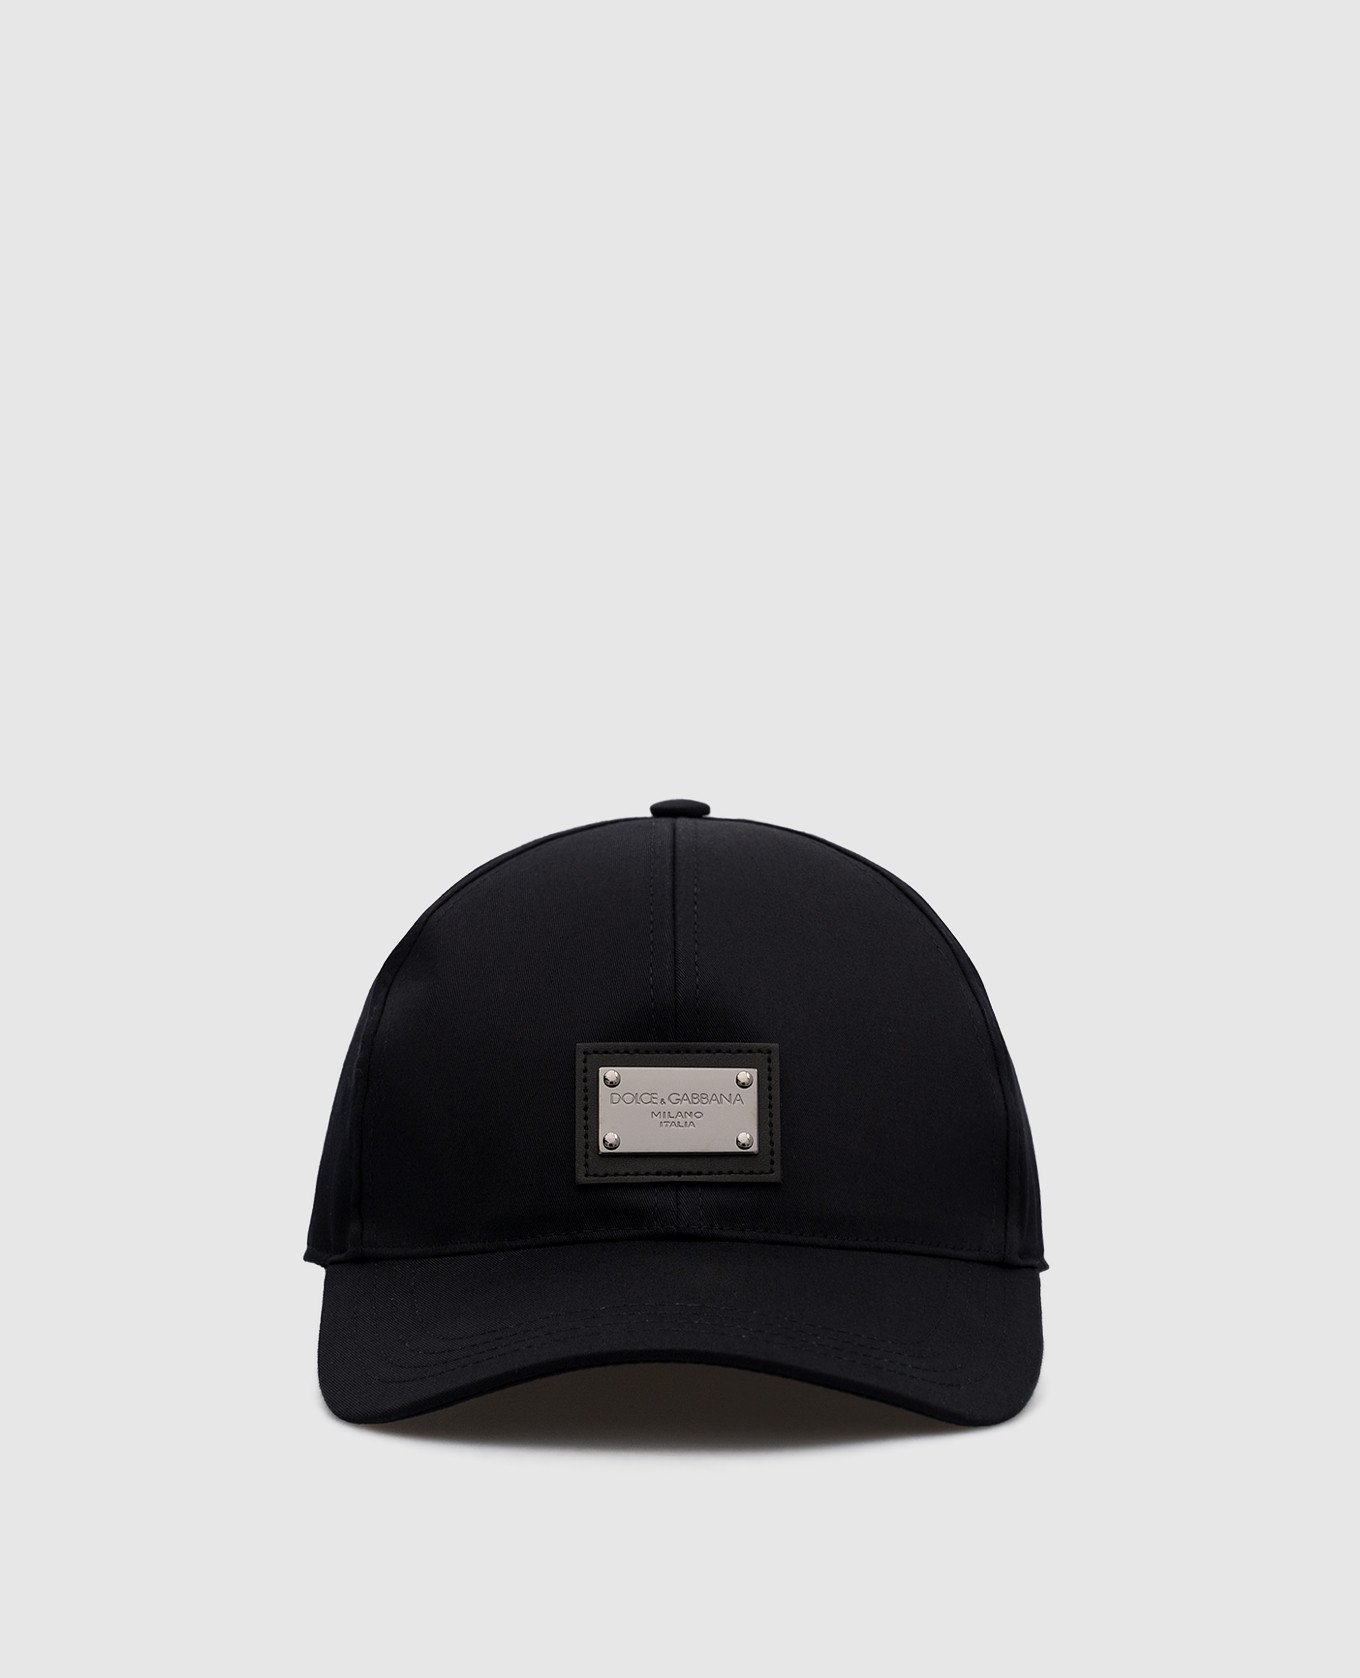 Black cap with metal logo patch